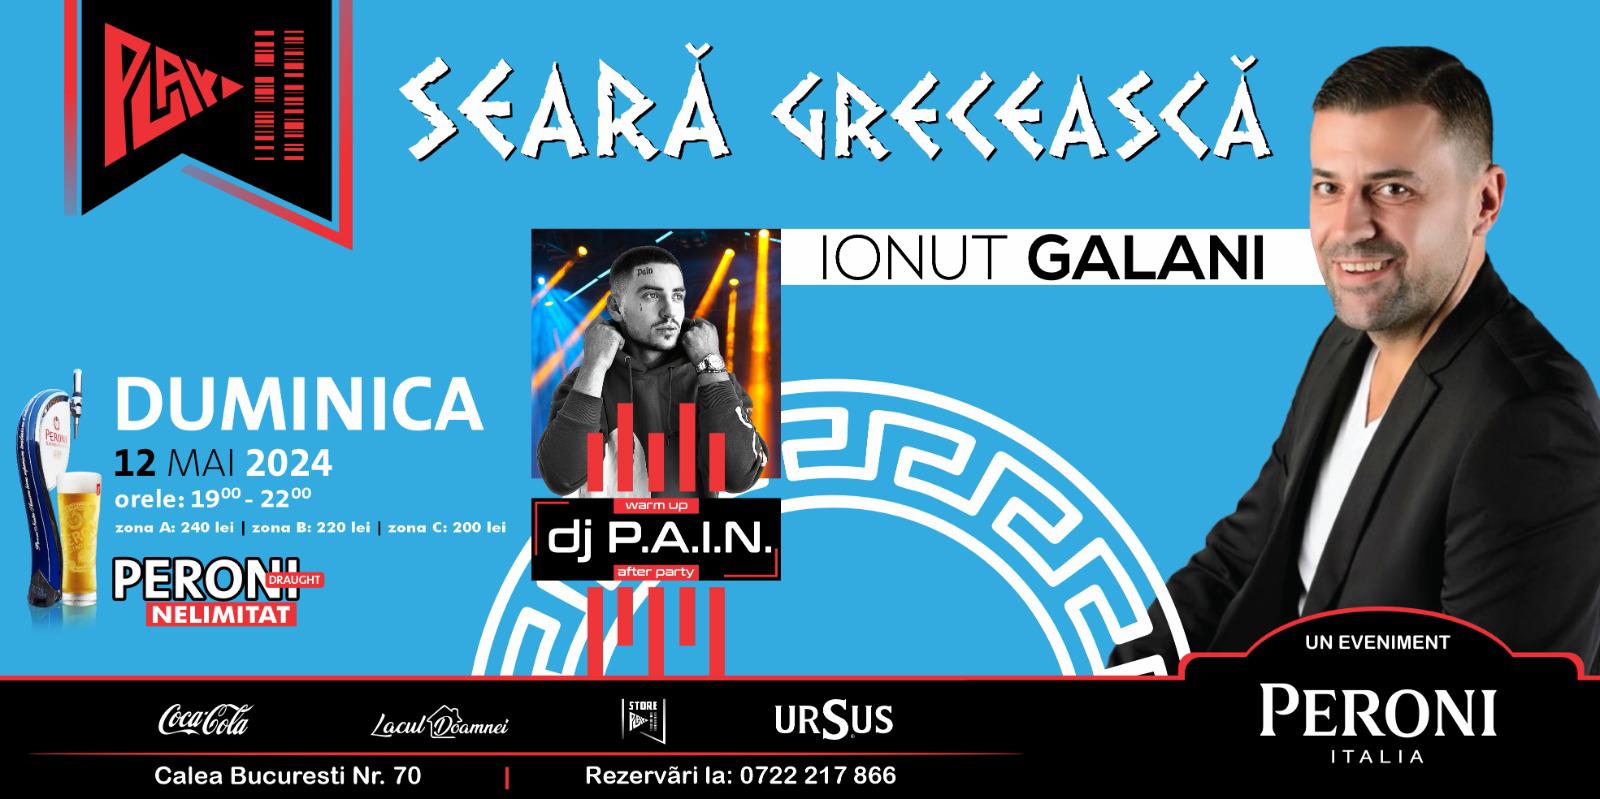 Seara greceasca | Ionuț Galani & Band | live pe terasa Cafe-Teatru Play